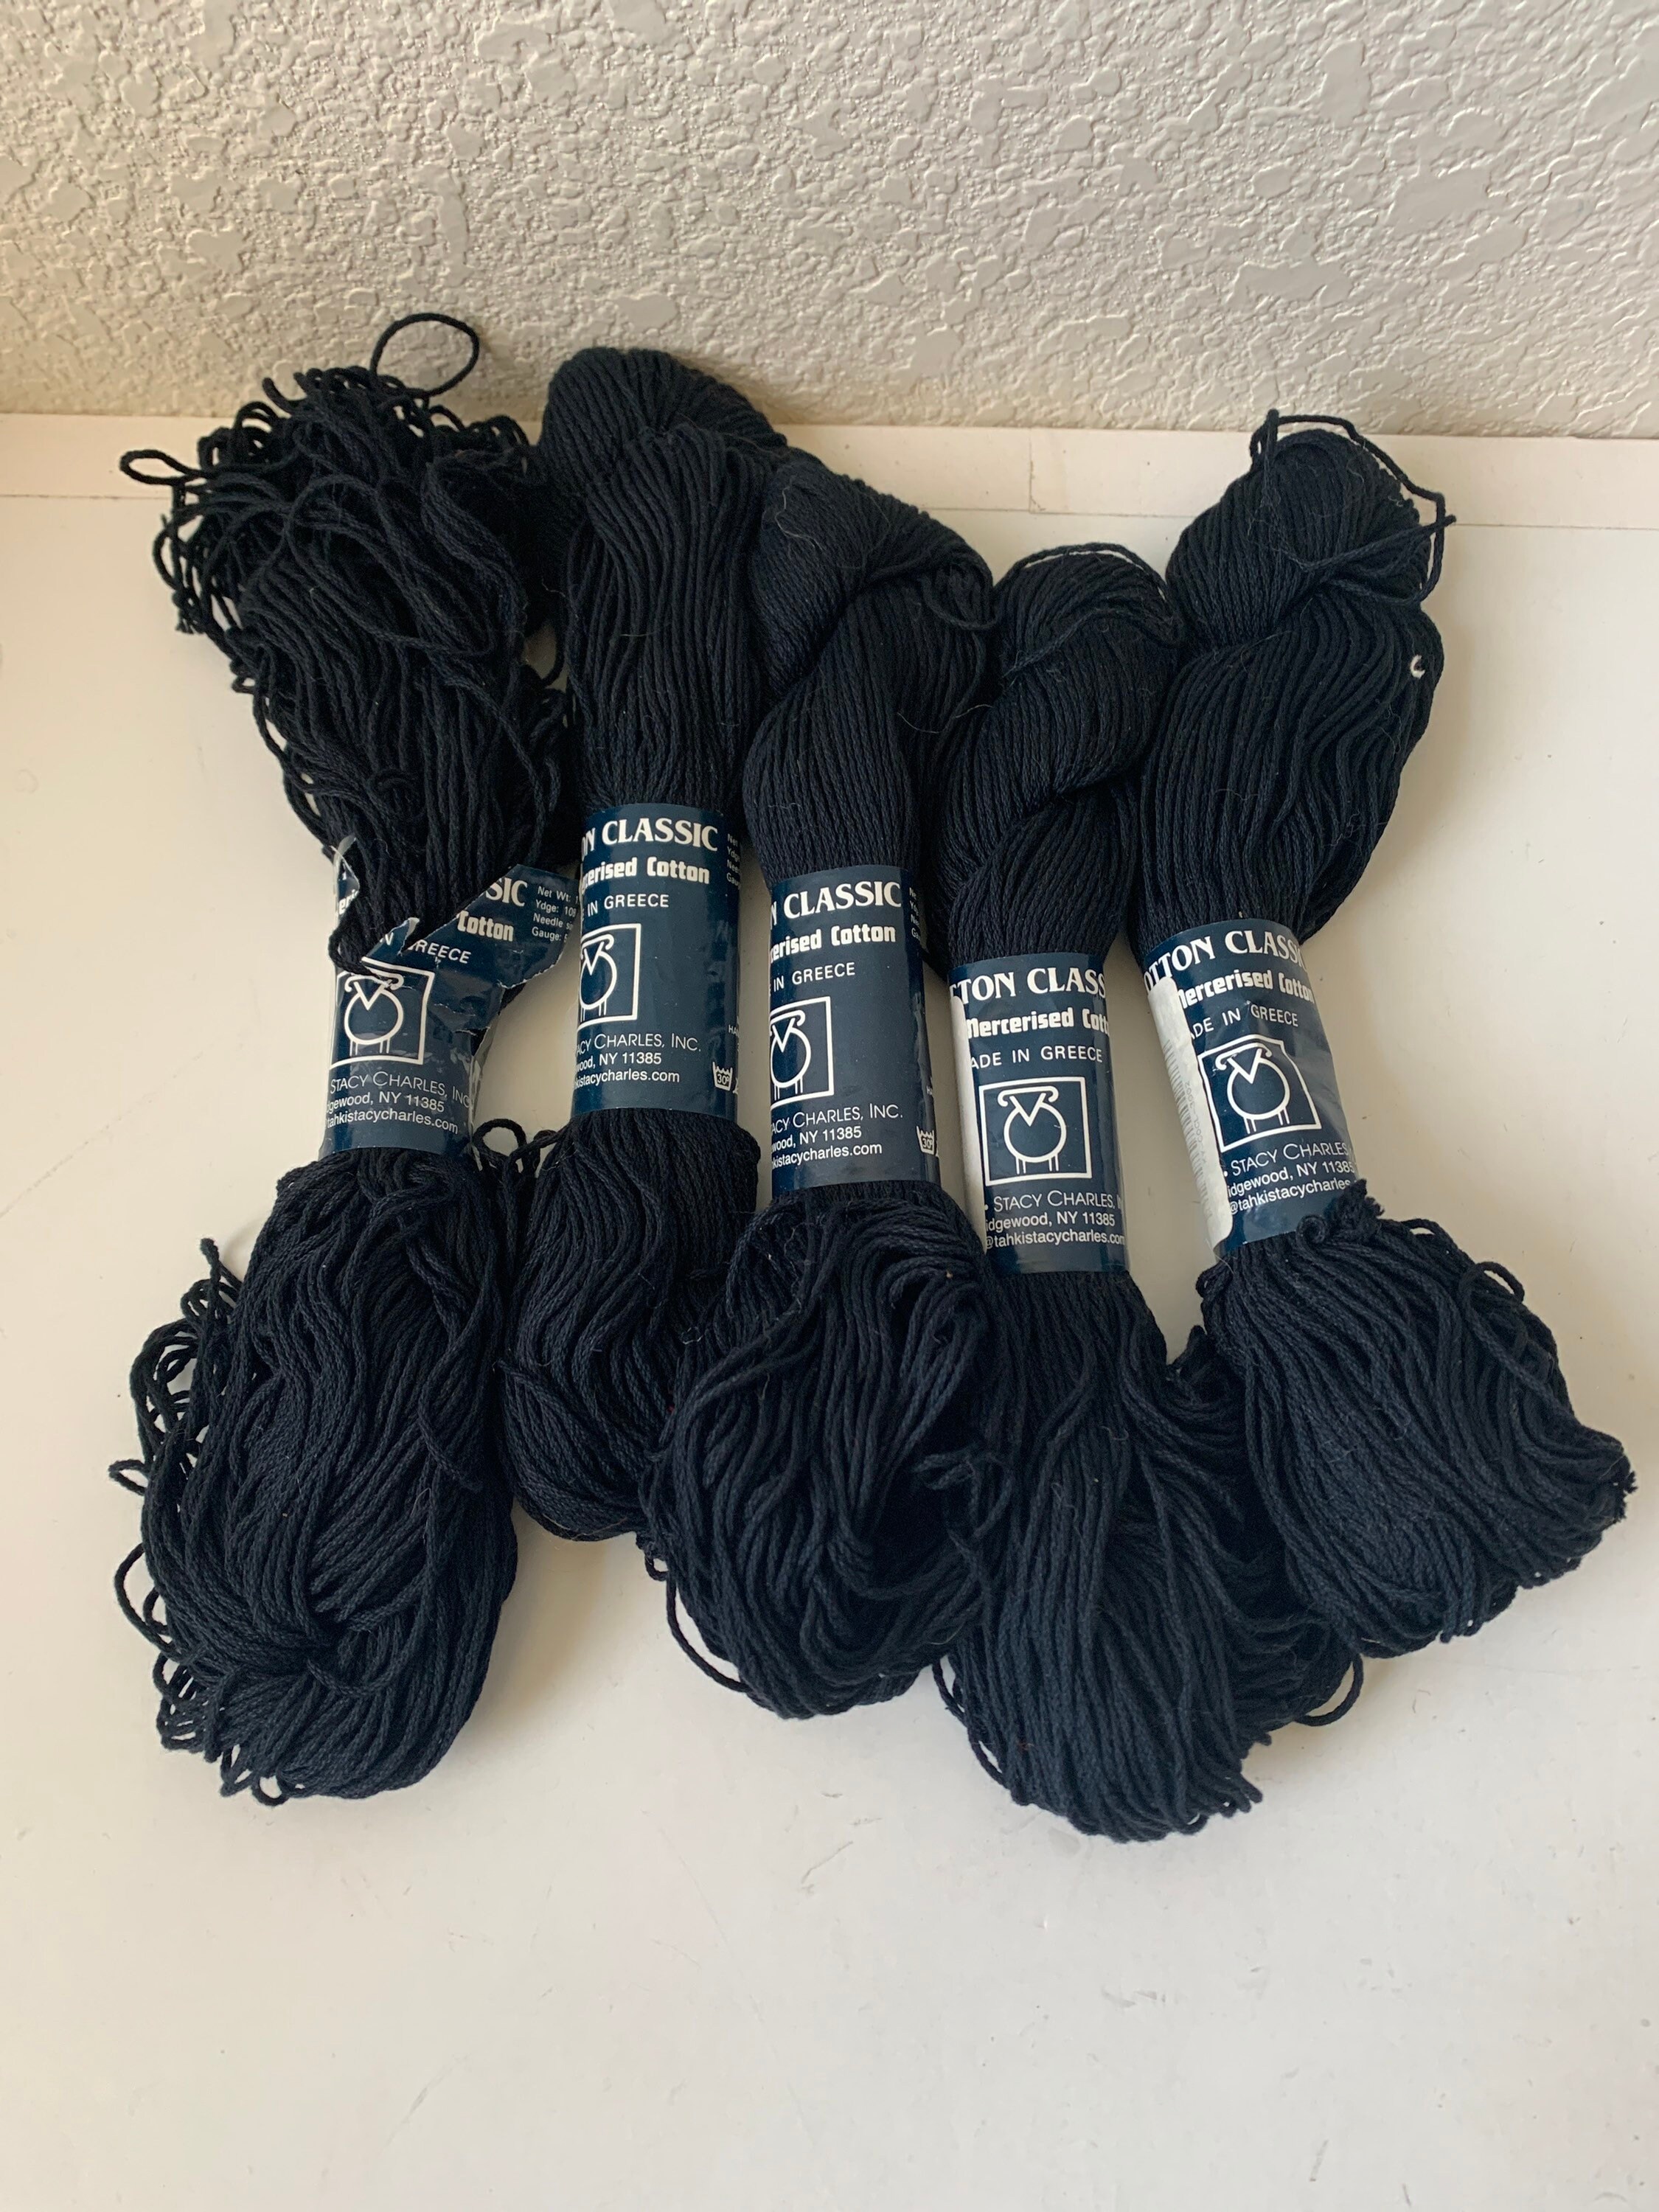 YARNART JEANS yarn cotton acrylic yarn Hypoallergenic yarn knitting cotton  crochet yarn fiber classic yarn Turkish